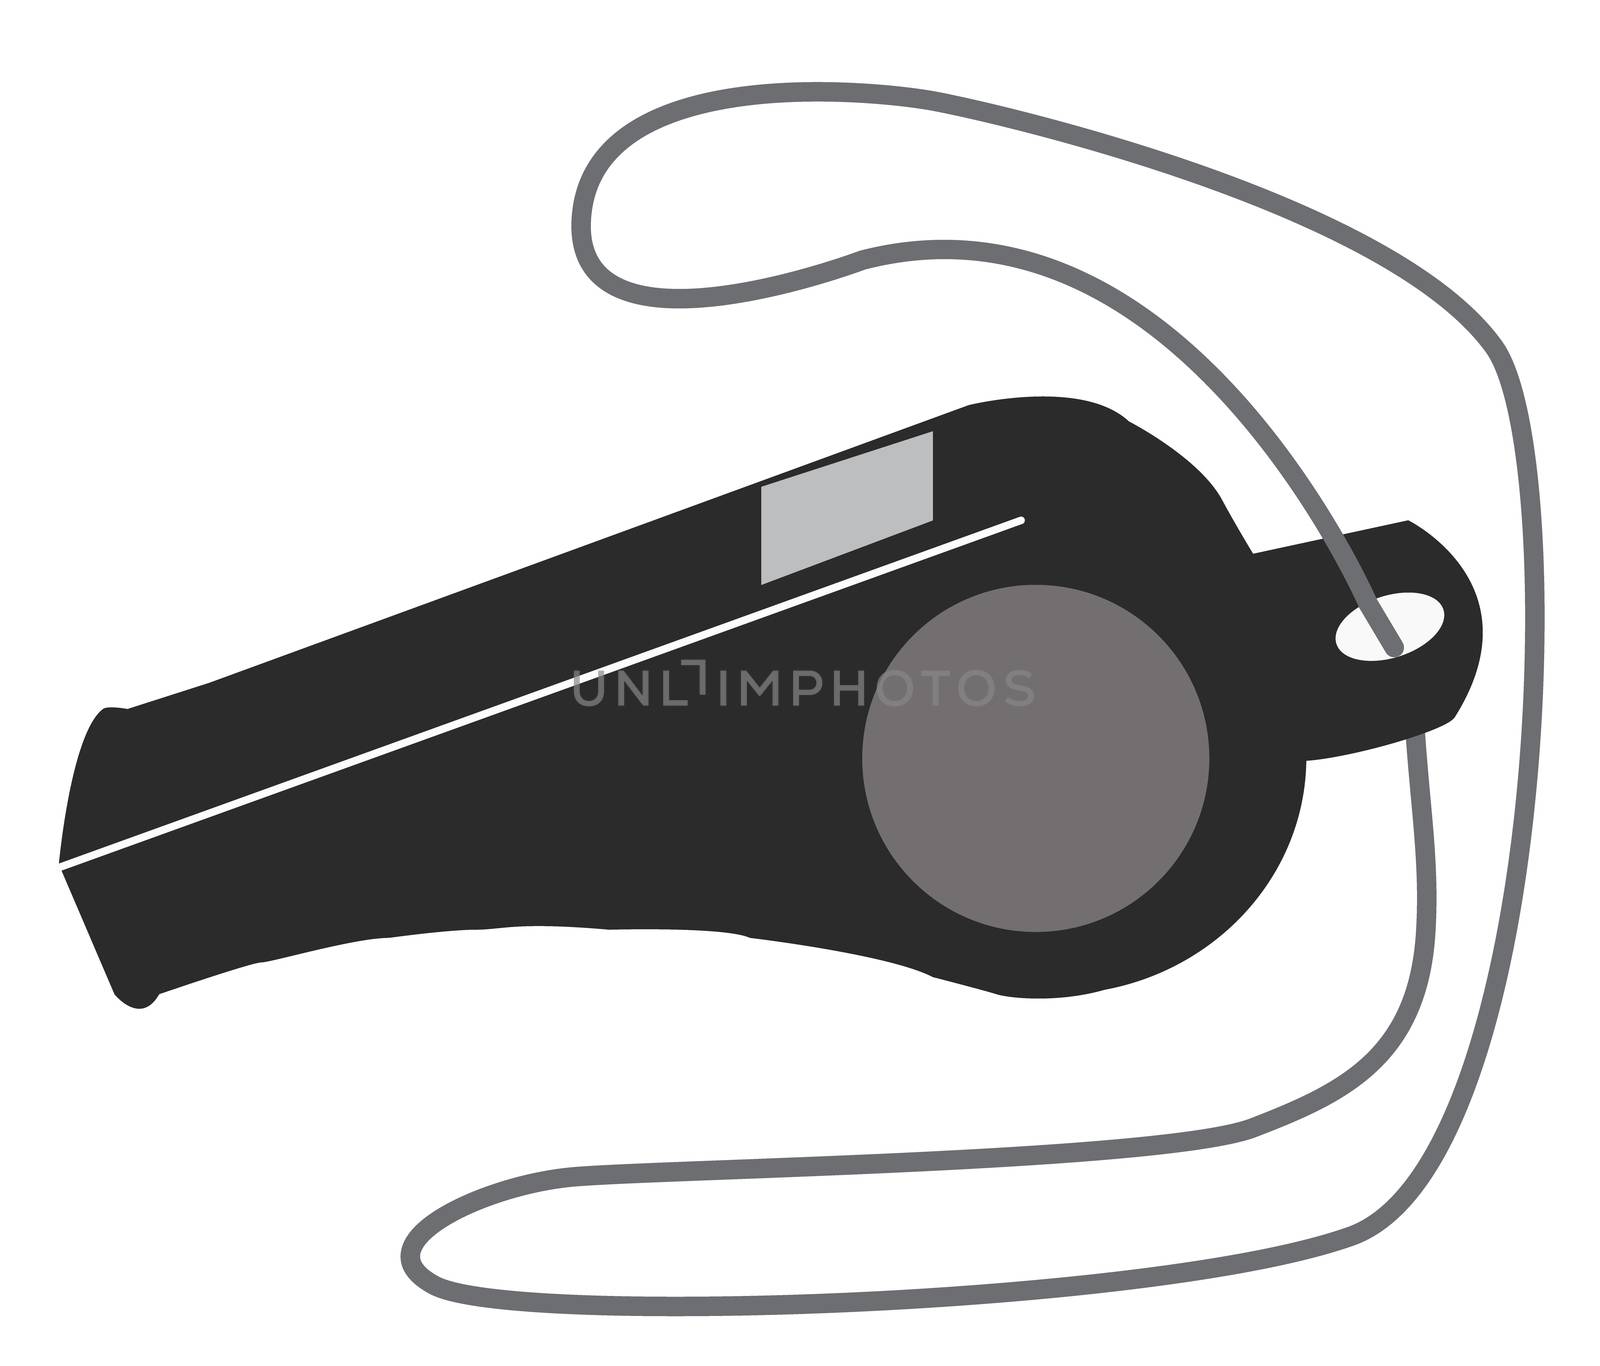 whistle icon on white background. whistle sign. flat style design.